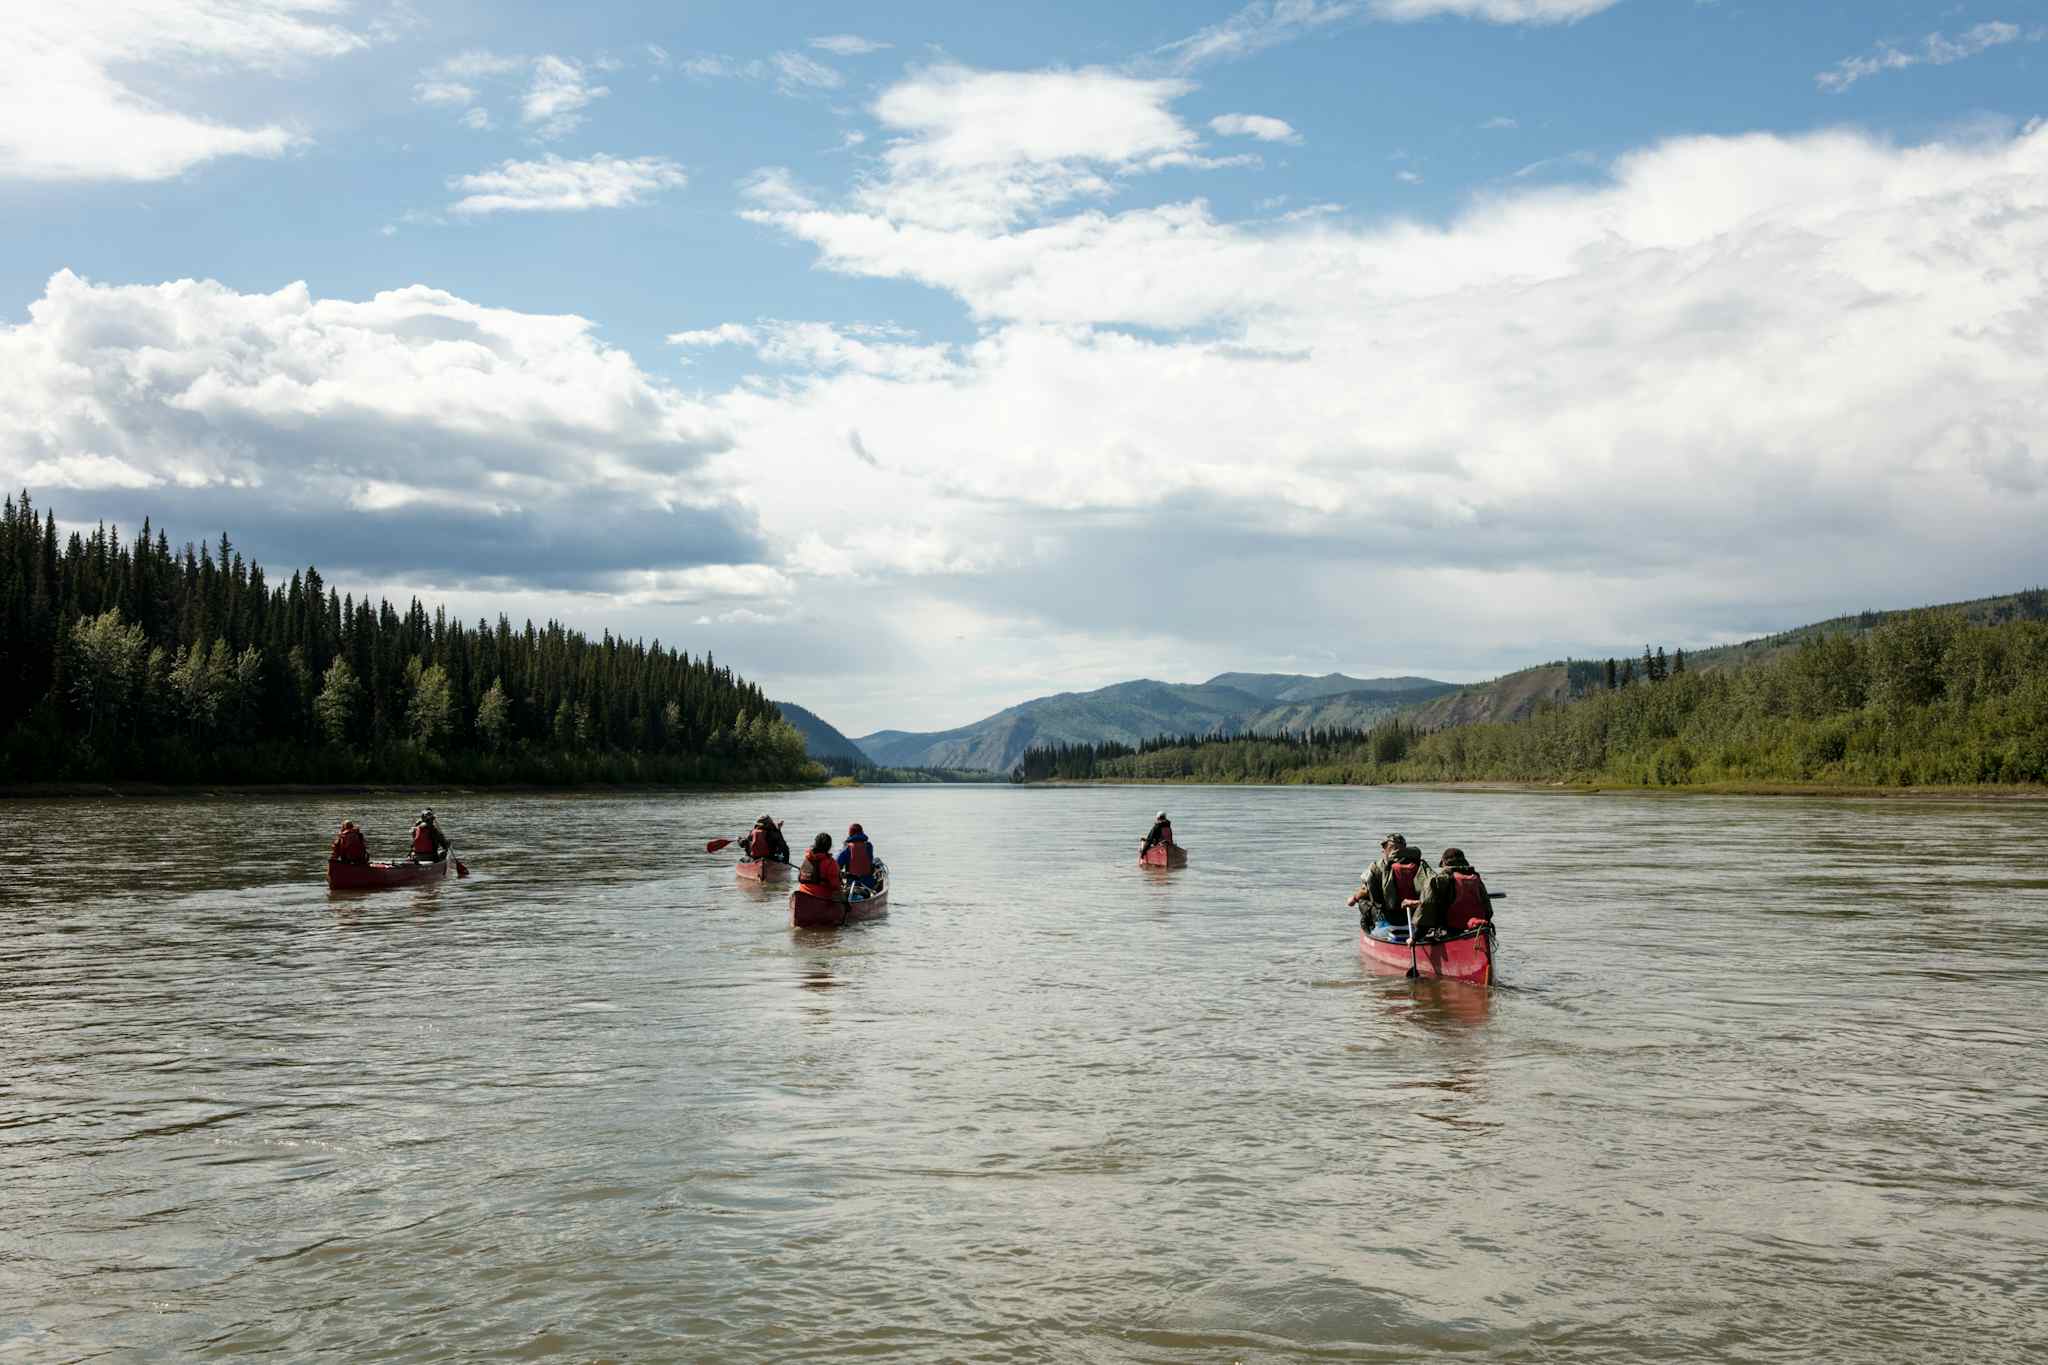 Yukon River canoe, Canada
Host image: Ruby Range Adventures